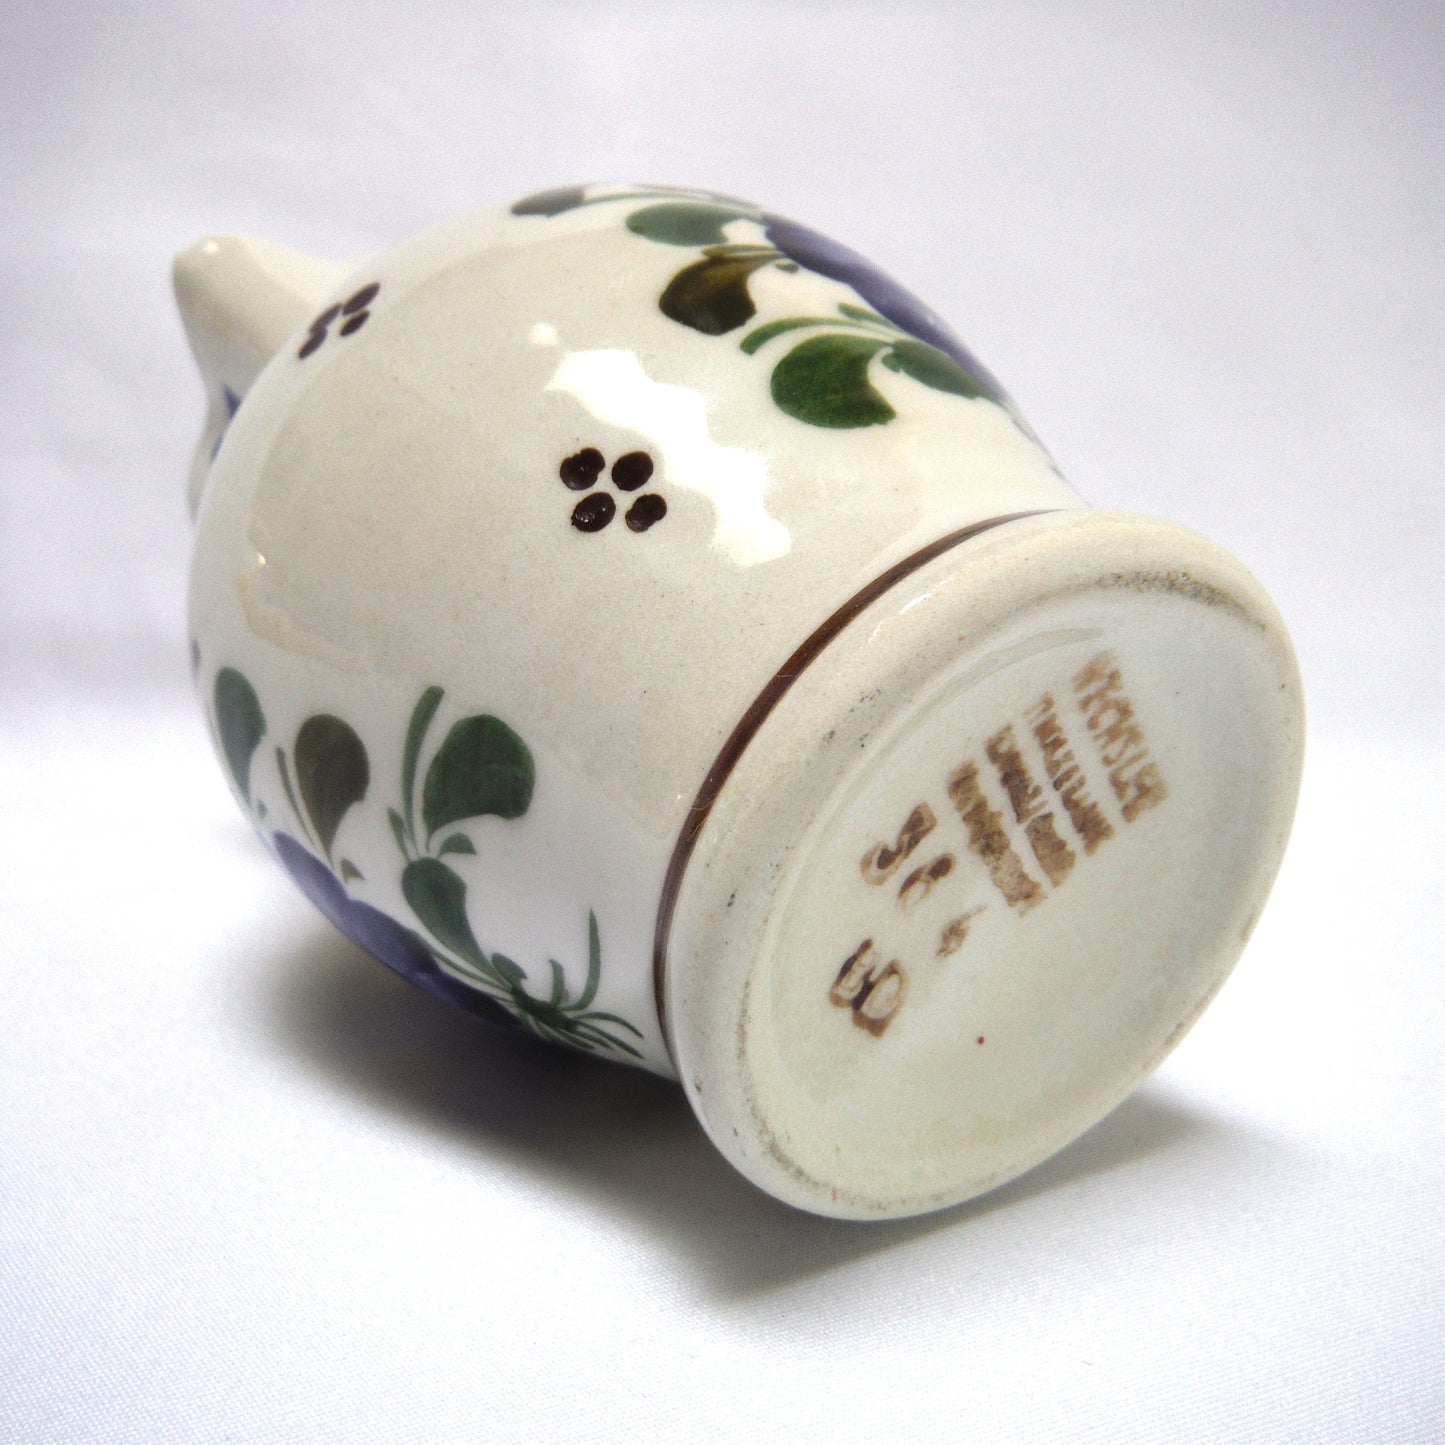 Vintage Miniature Milk Jug, A Rare Hand-Painted Wechsler Ceramic from Shwartz/Austria